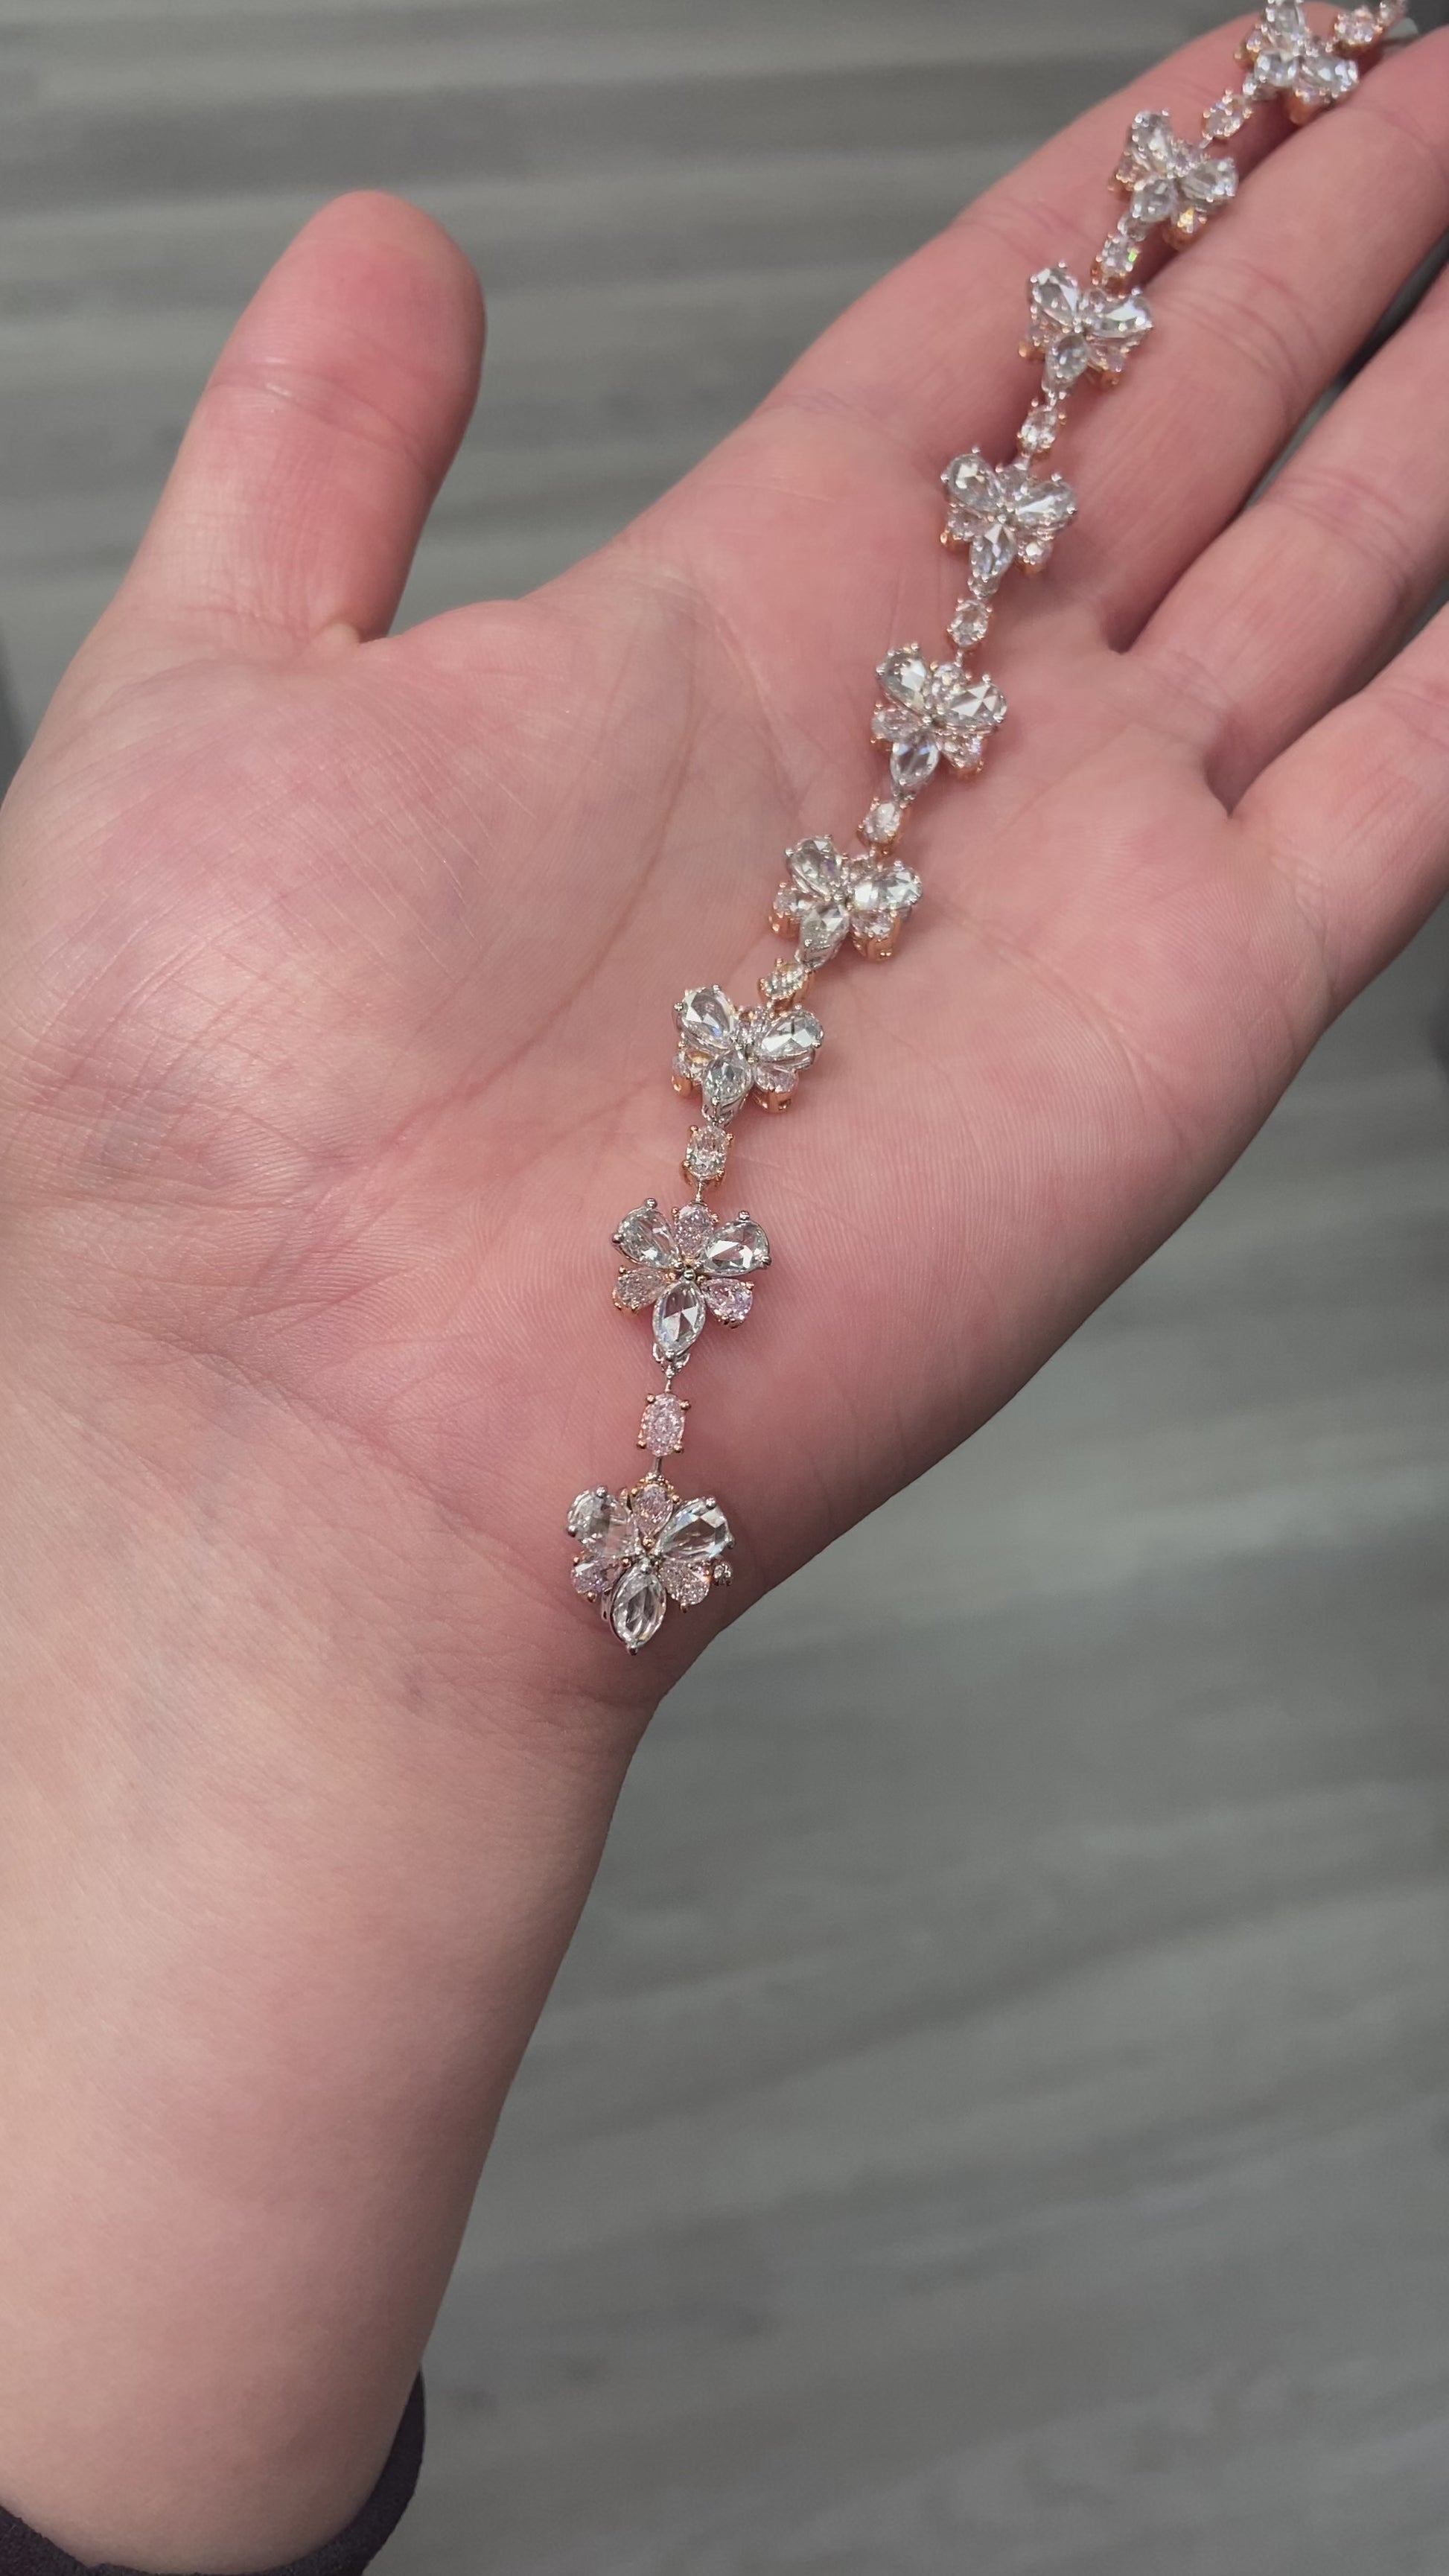 rare colors. pink diamond bracelet. pink floral bracelet. pink pear shape diamond. pink and white diamond bracelet. Natural pink diamond jewelry.